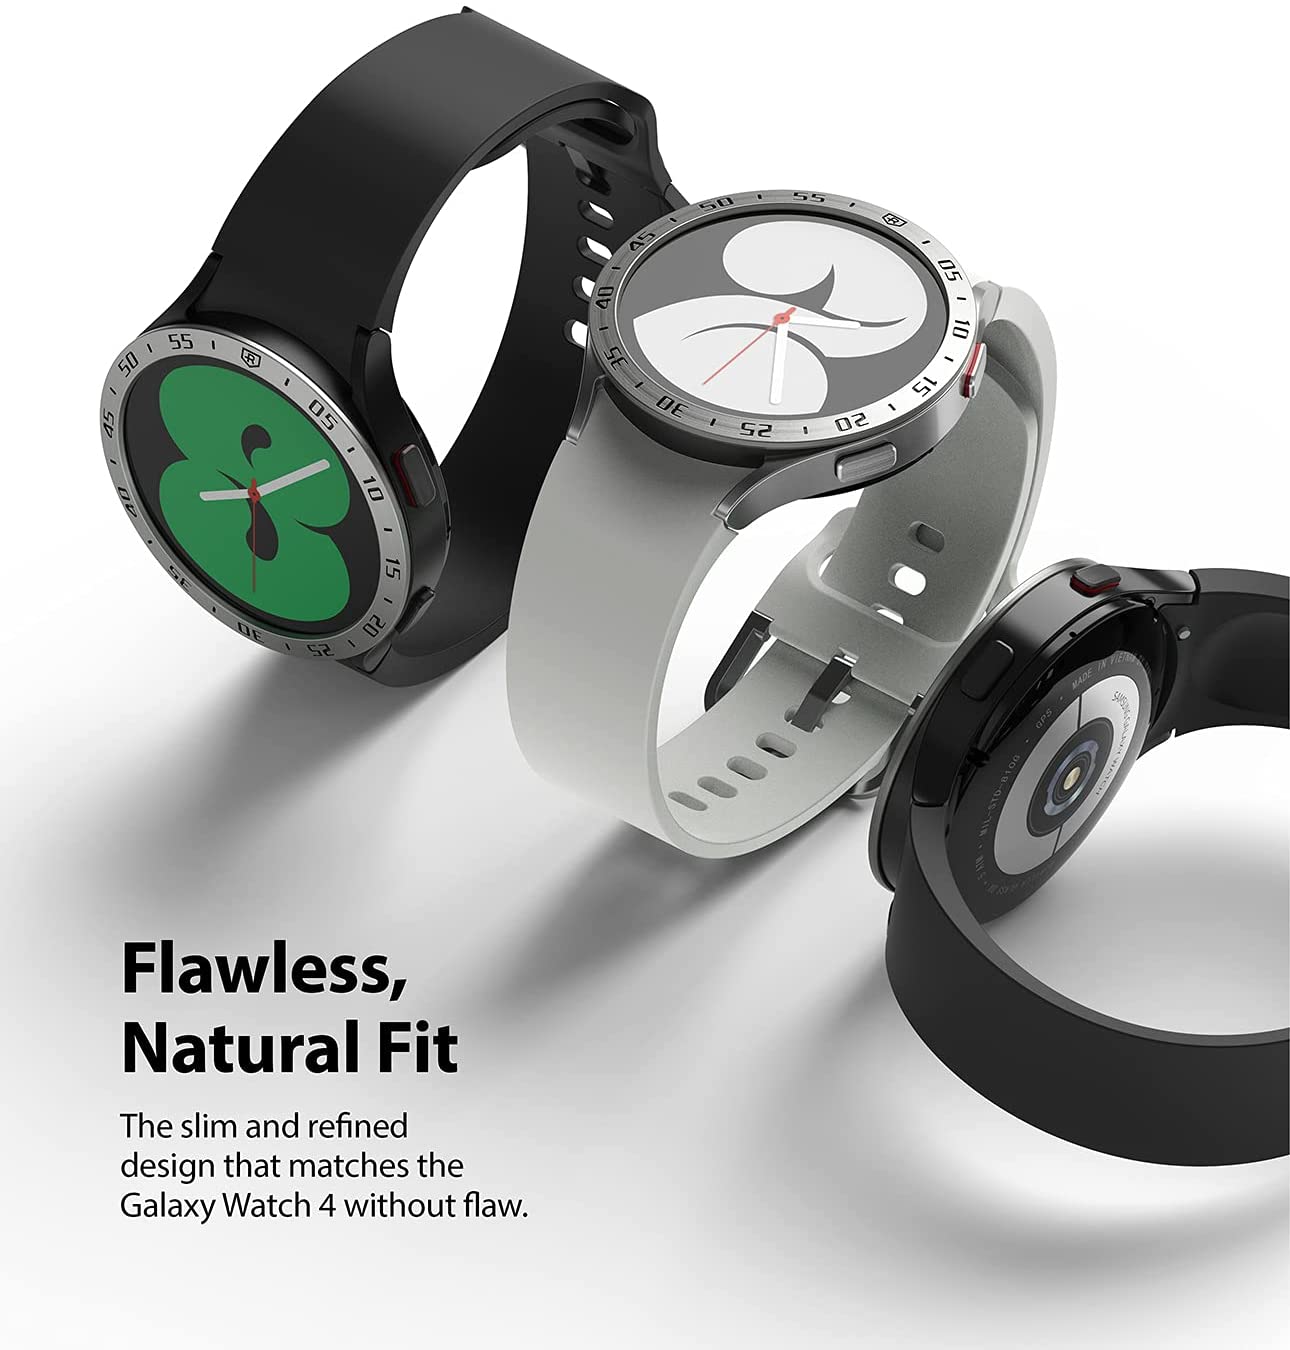 Bezel Styling Samsung Galaxy Watch 4 44mm Silber